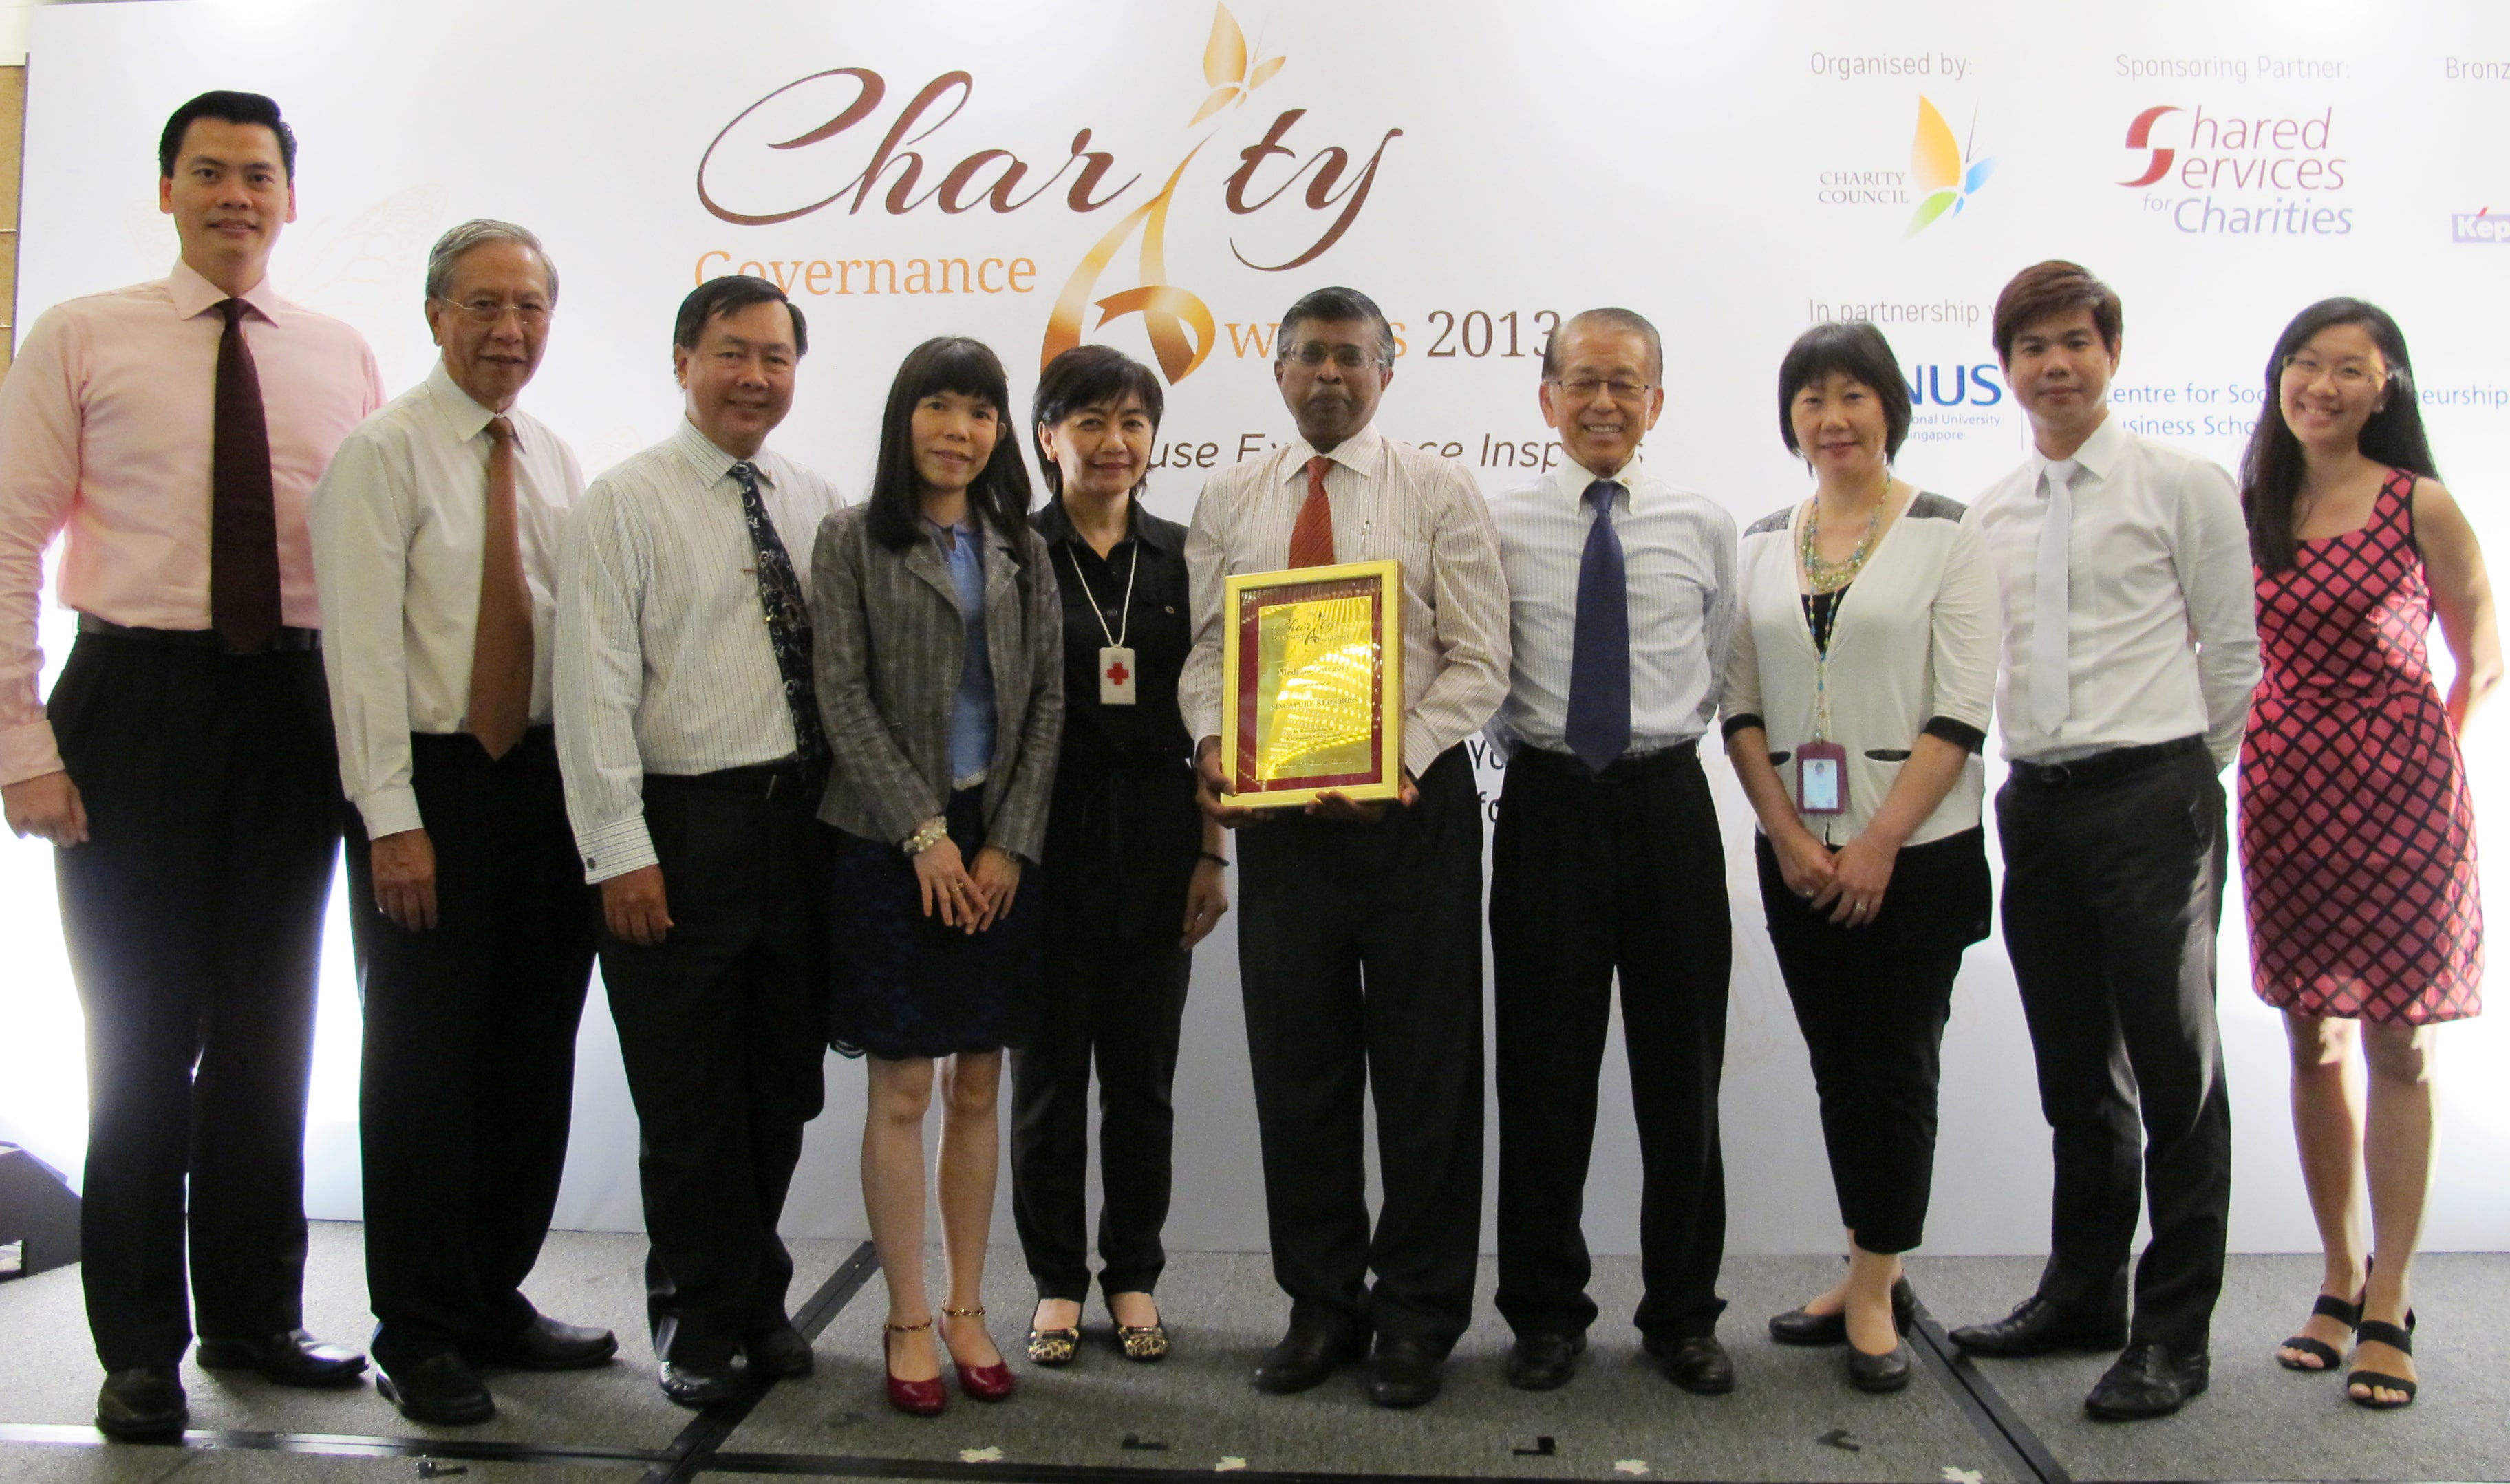 Singapore Red Cross Charity Governance Award 2013